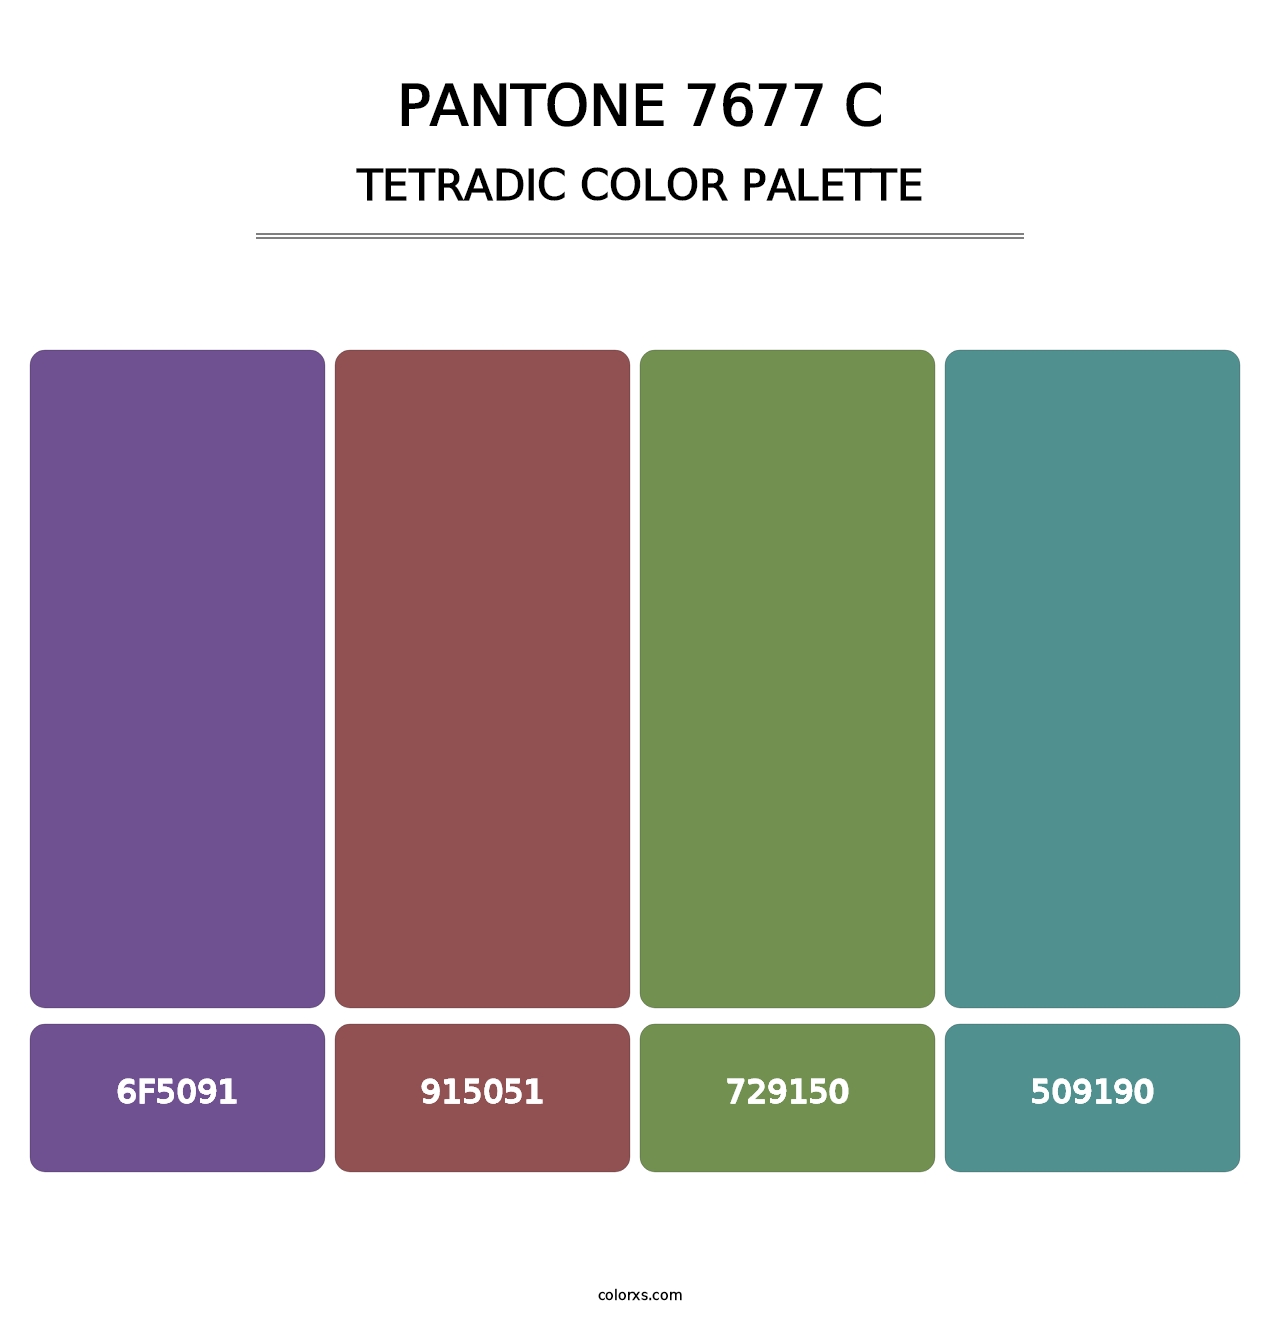 PANTONE 7677 C - Tetradic Color Palette